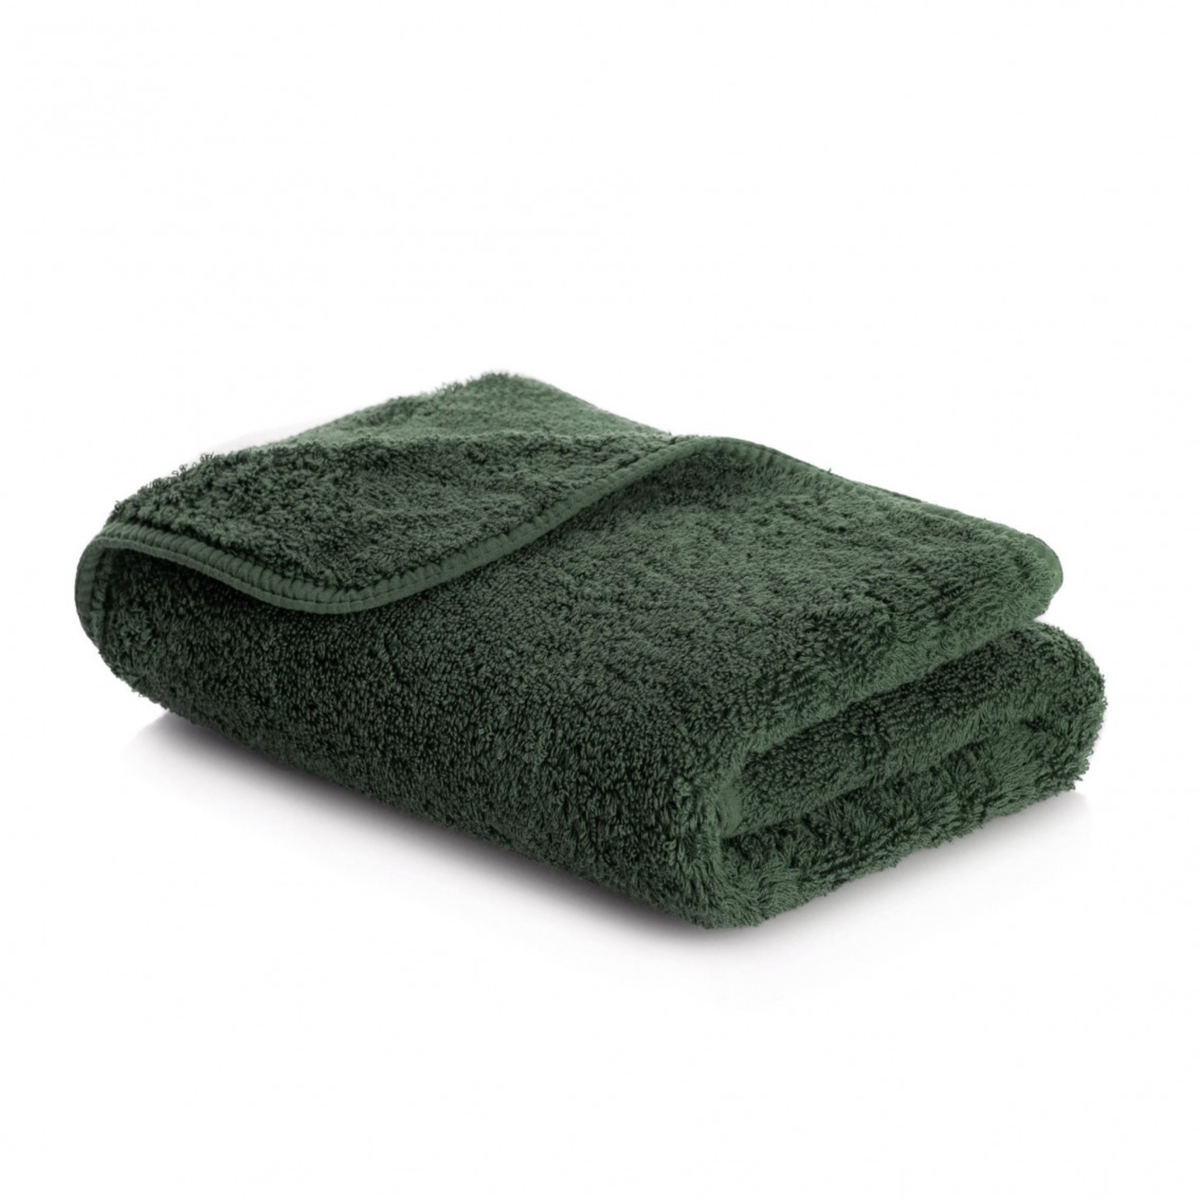 Folded Graccioza Long Double Loop Bath Towel in Moss Color